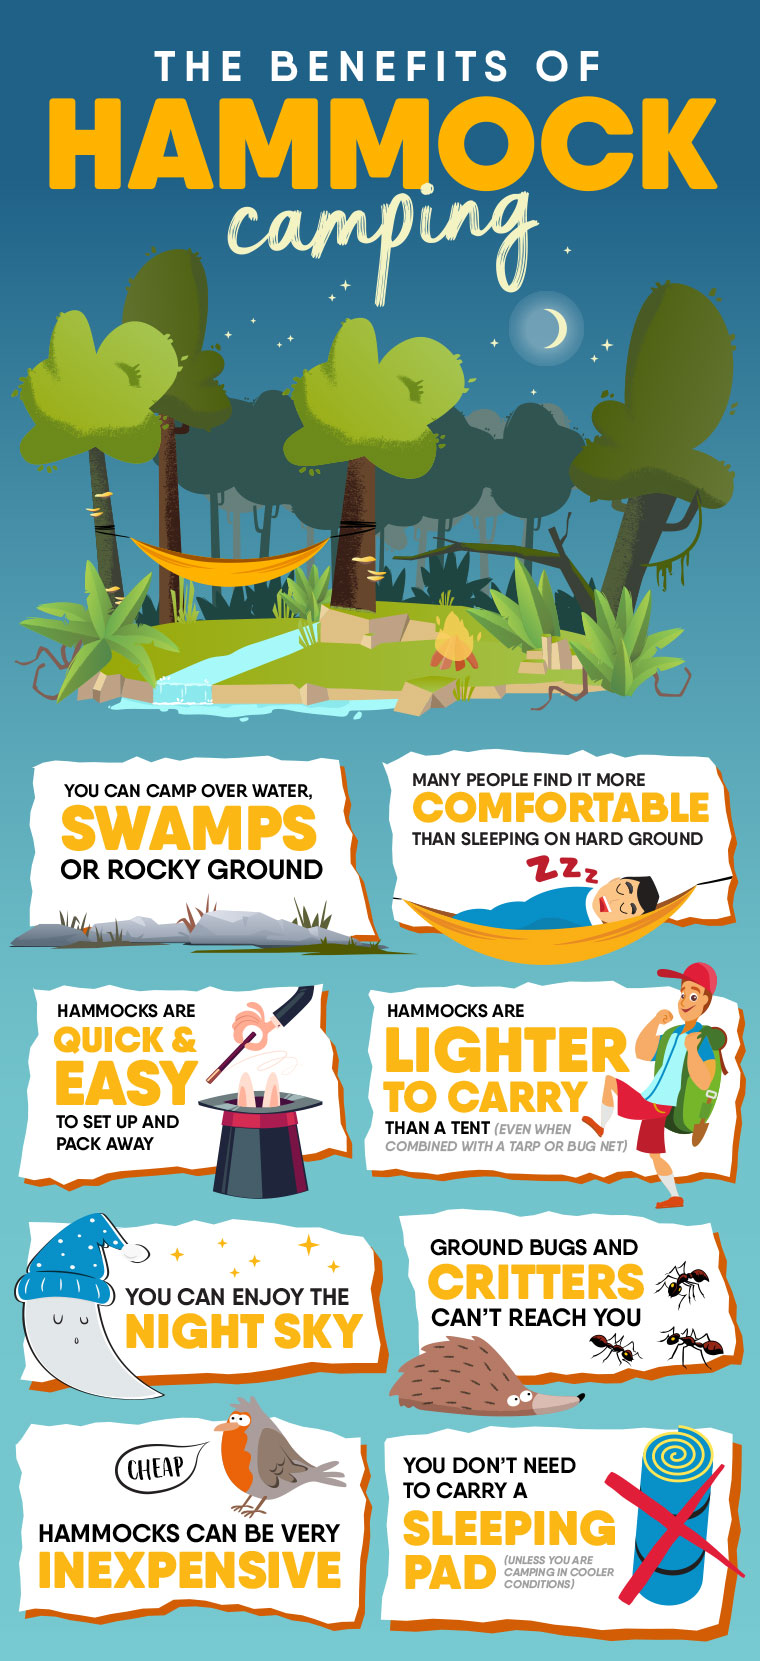 Benefits of hammock camping info